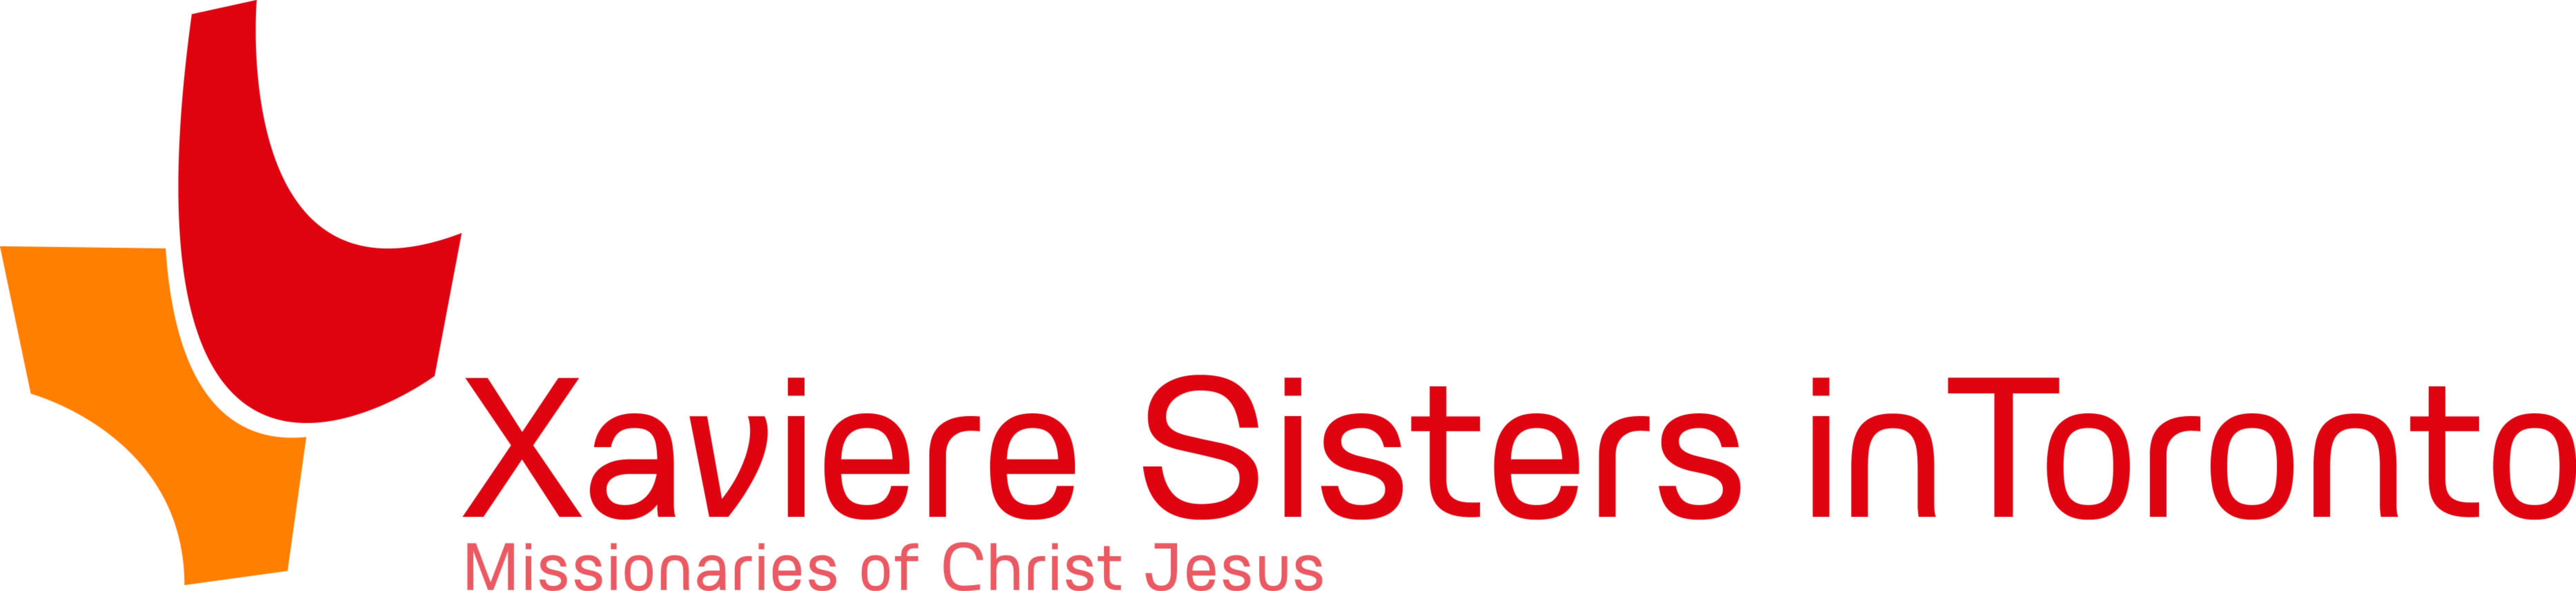 Xaviere Sisters in Toronto